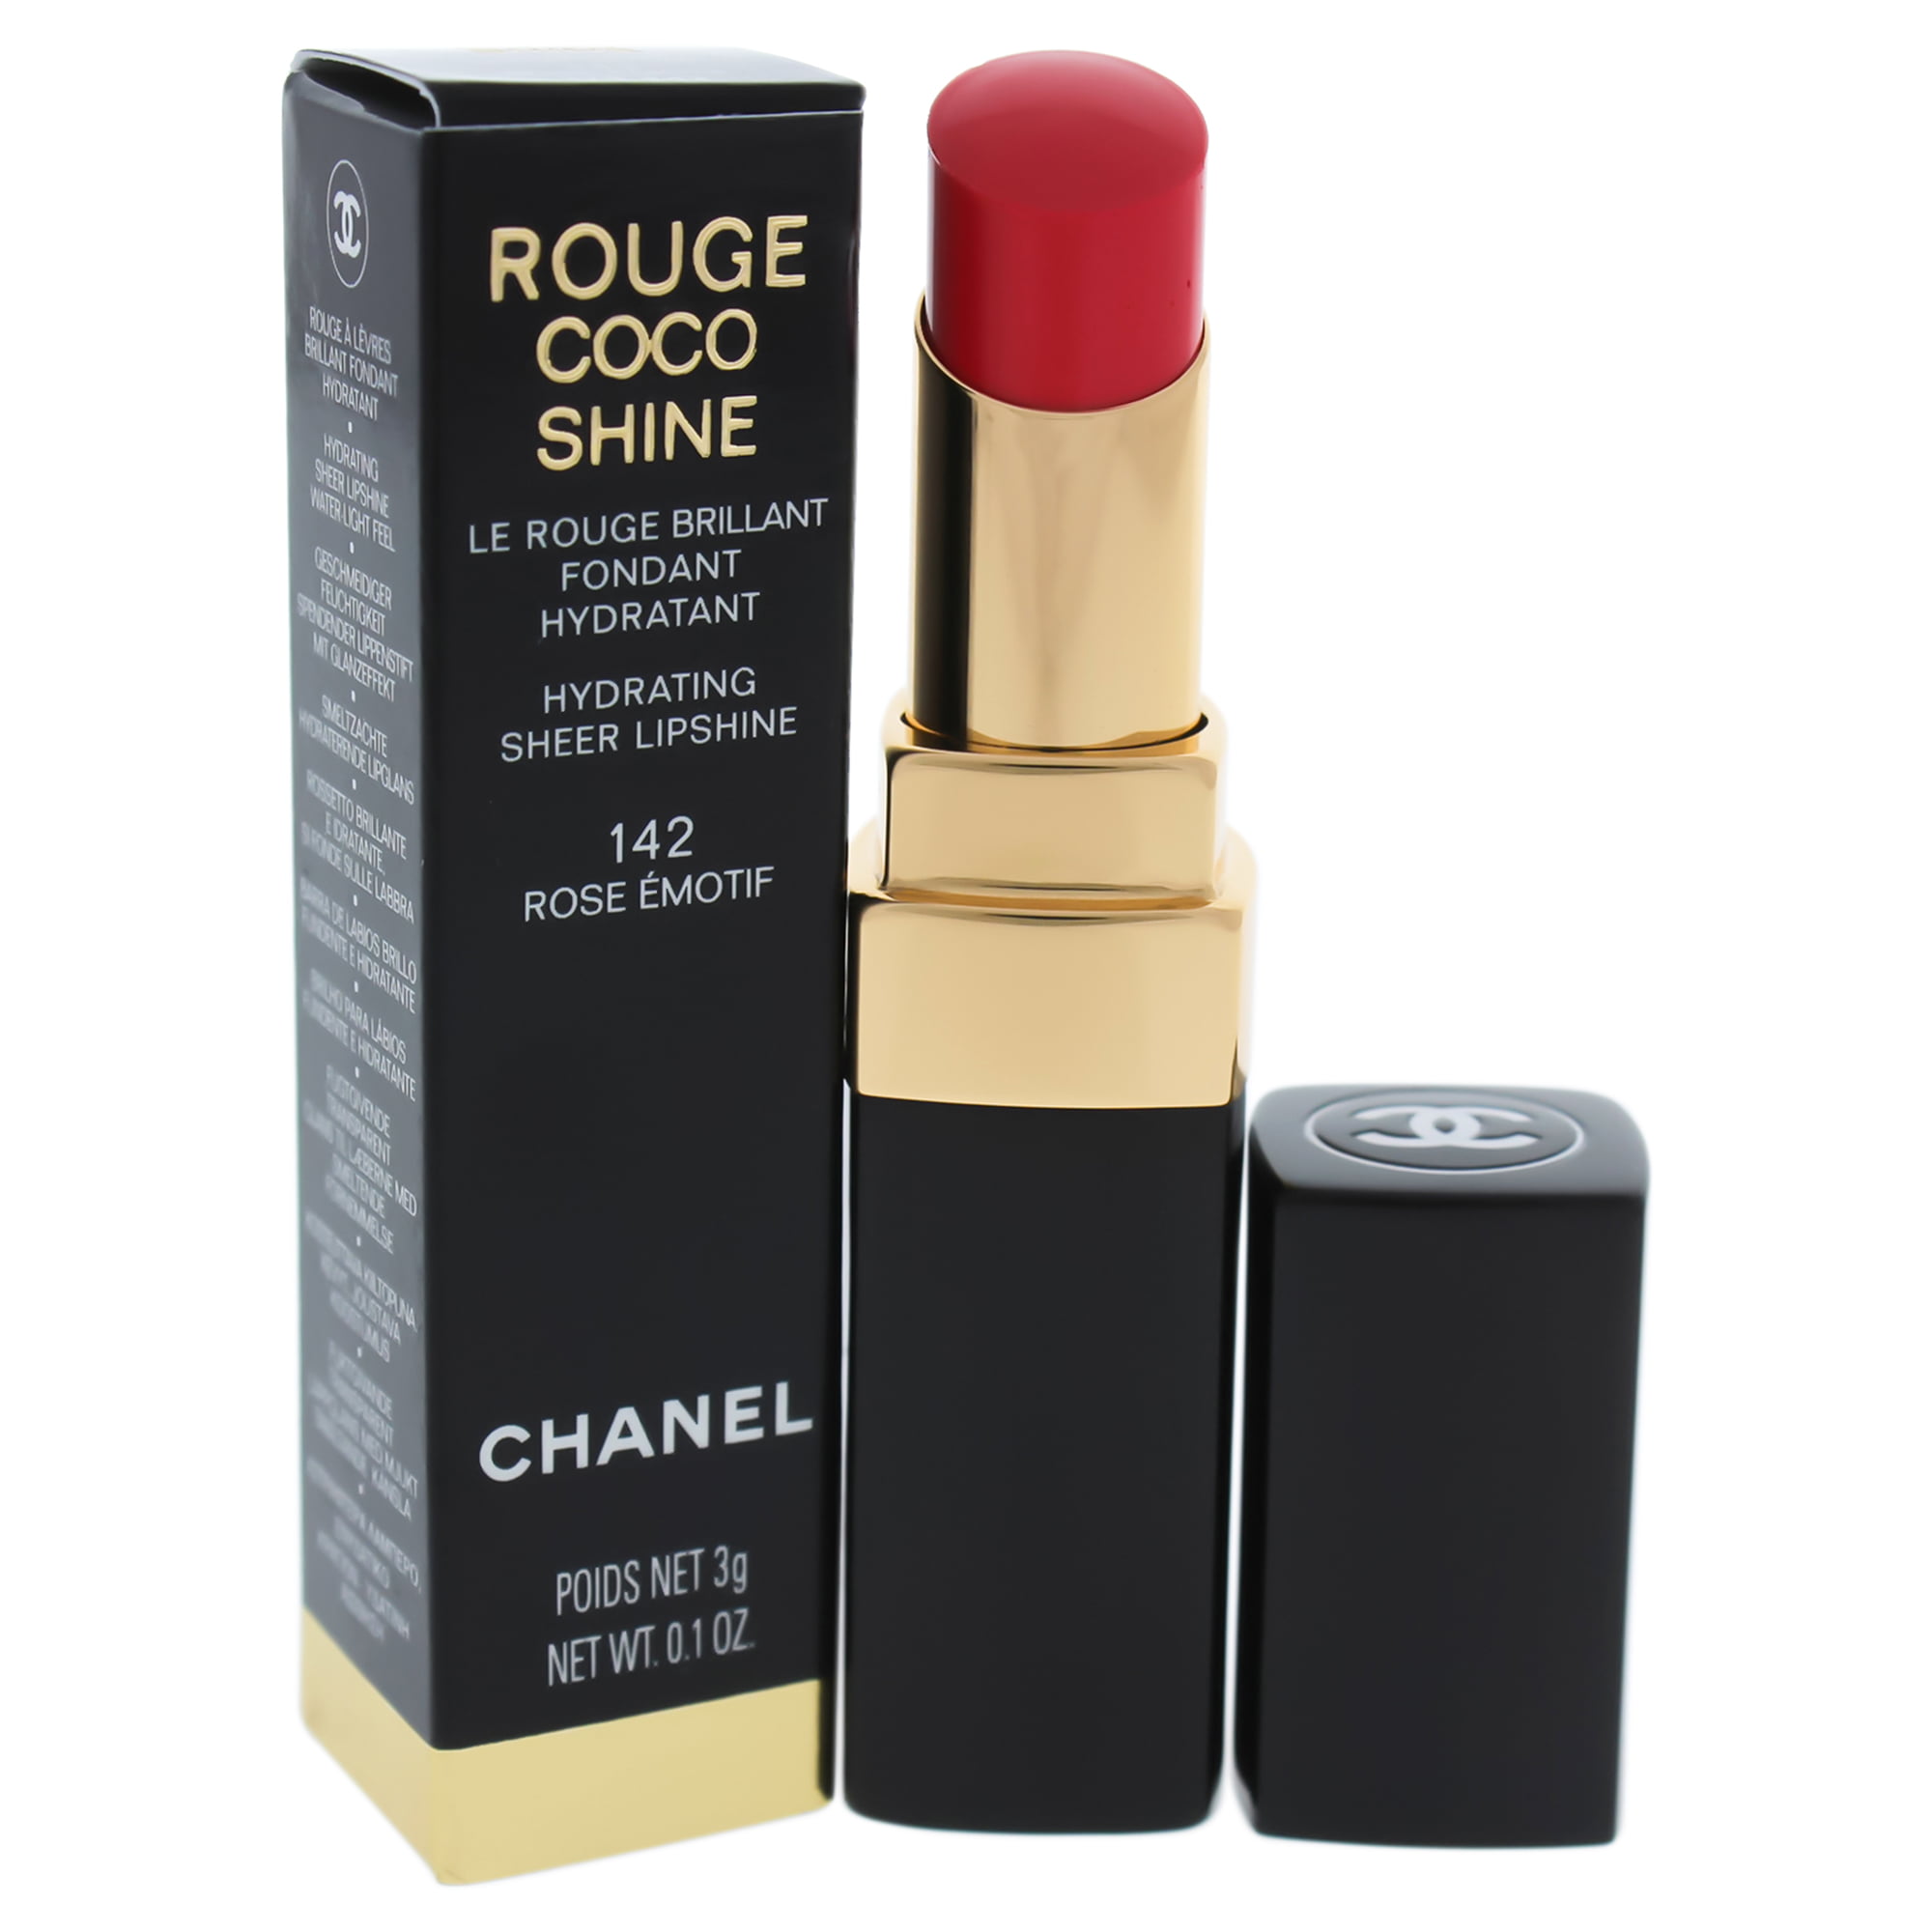 Rouge Hydrating Sheer Lipshine - 142 Rose Emotif Chanel for Women - 0.1 oz Lipstick Walmart.com